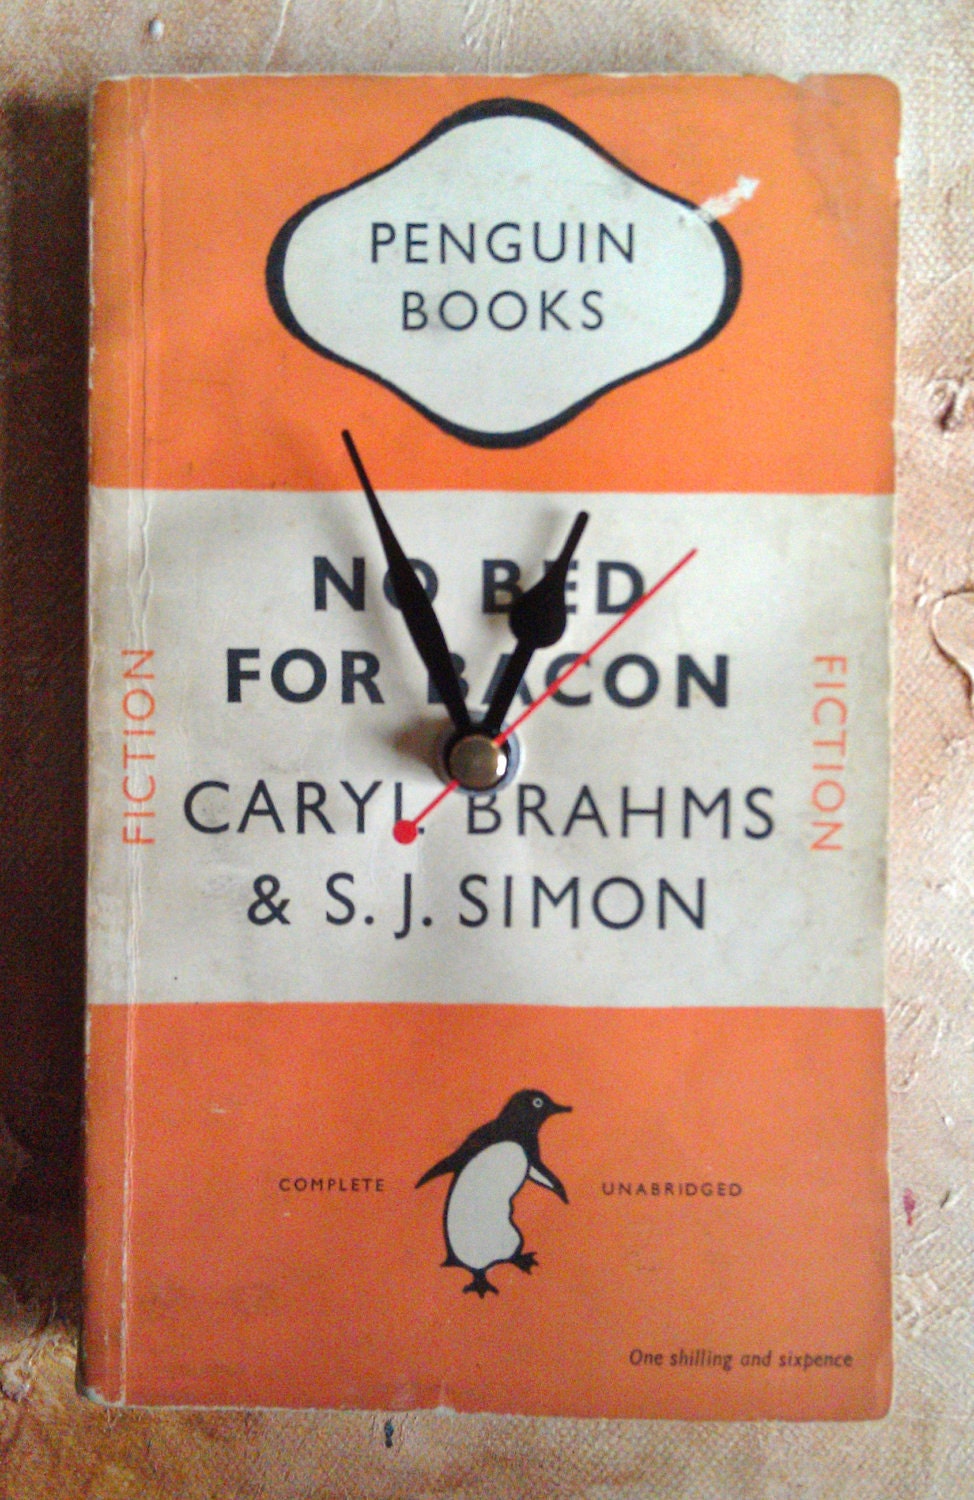 Caryl Brahms & S.J. Simon - No Bed For Bacon Original 1948 Penguin Book. Very UNIQUE. - StarfishQuay